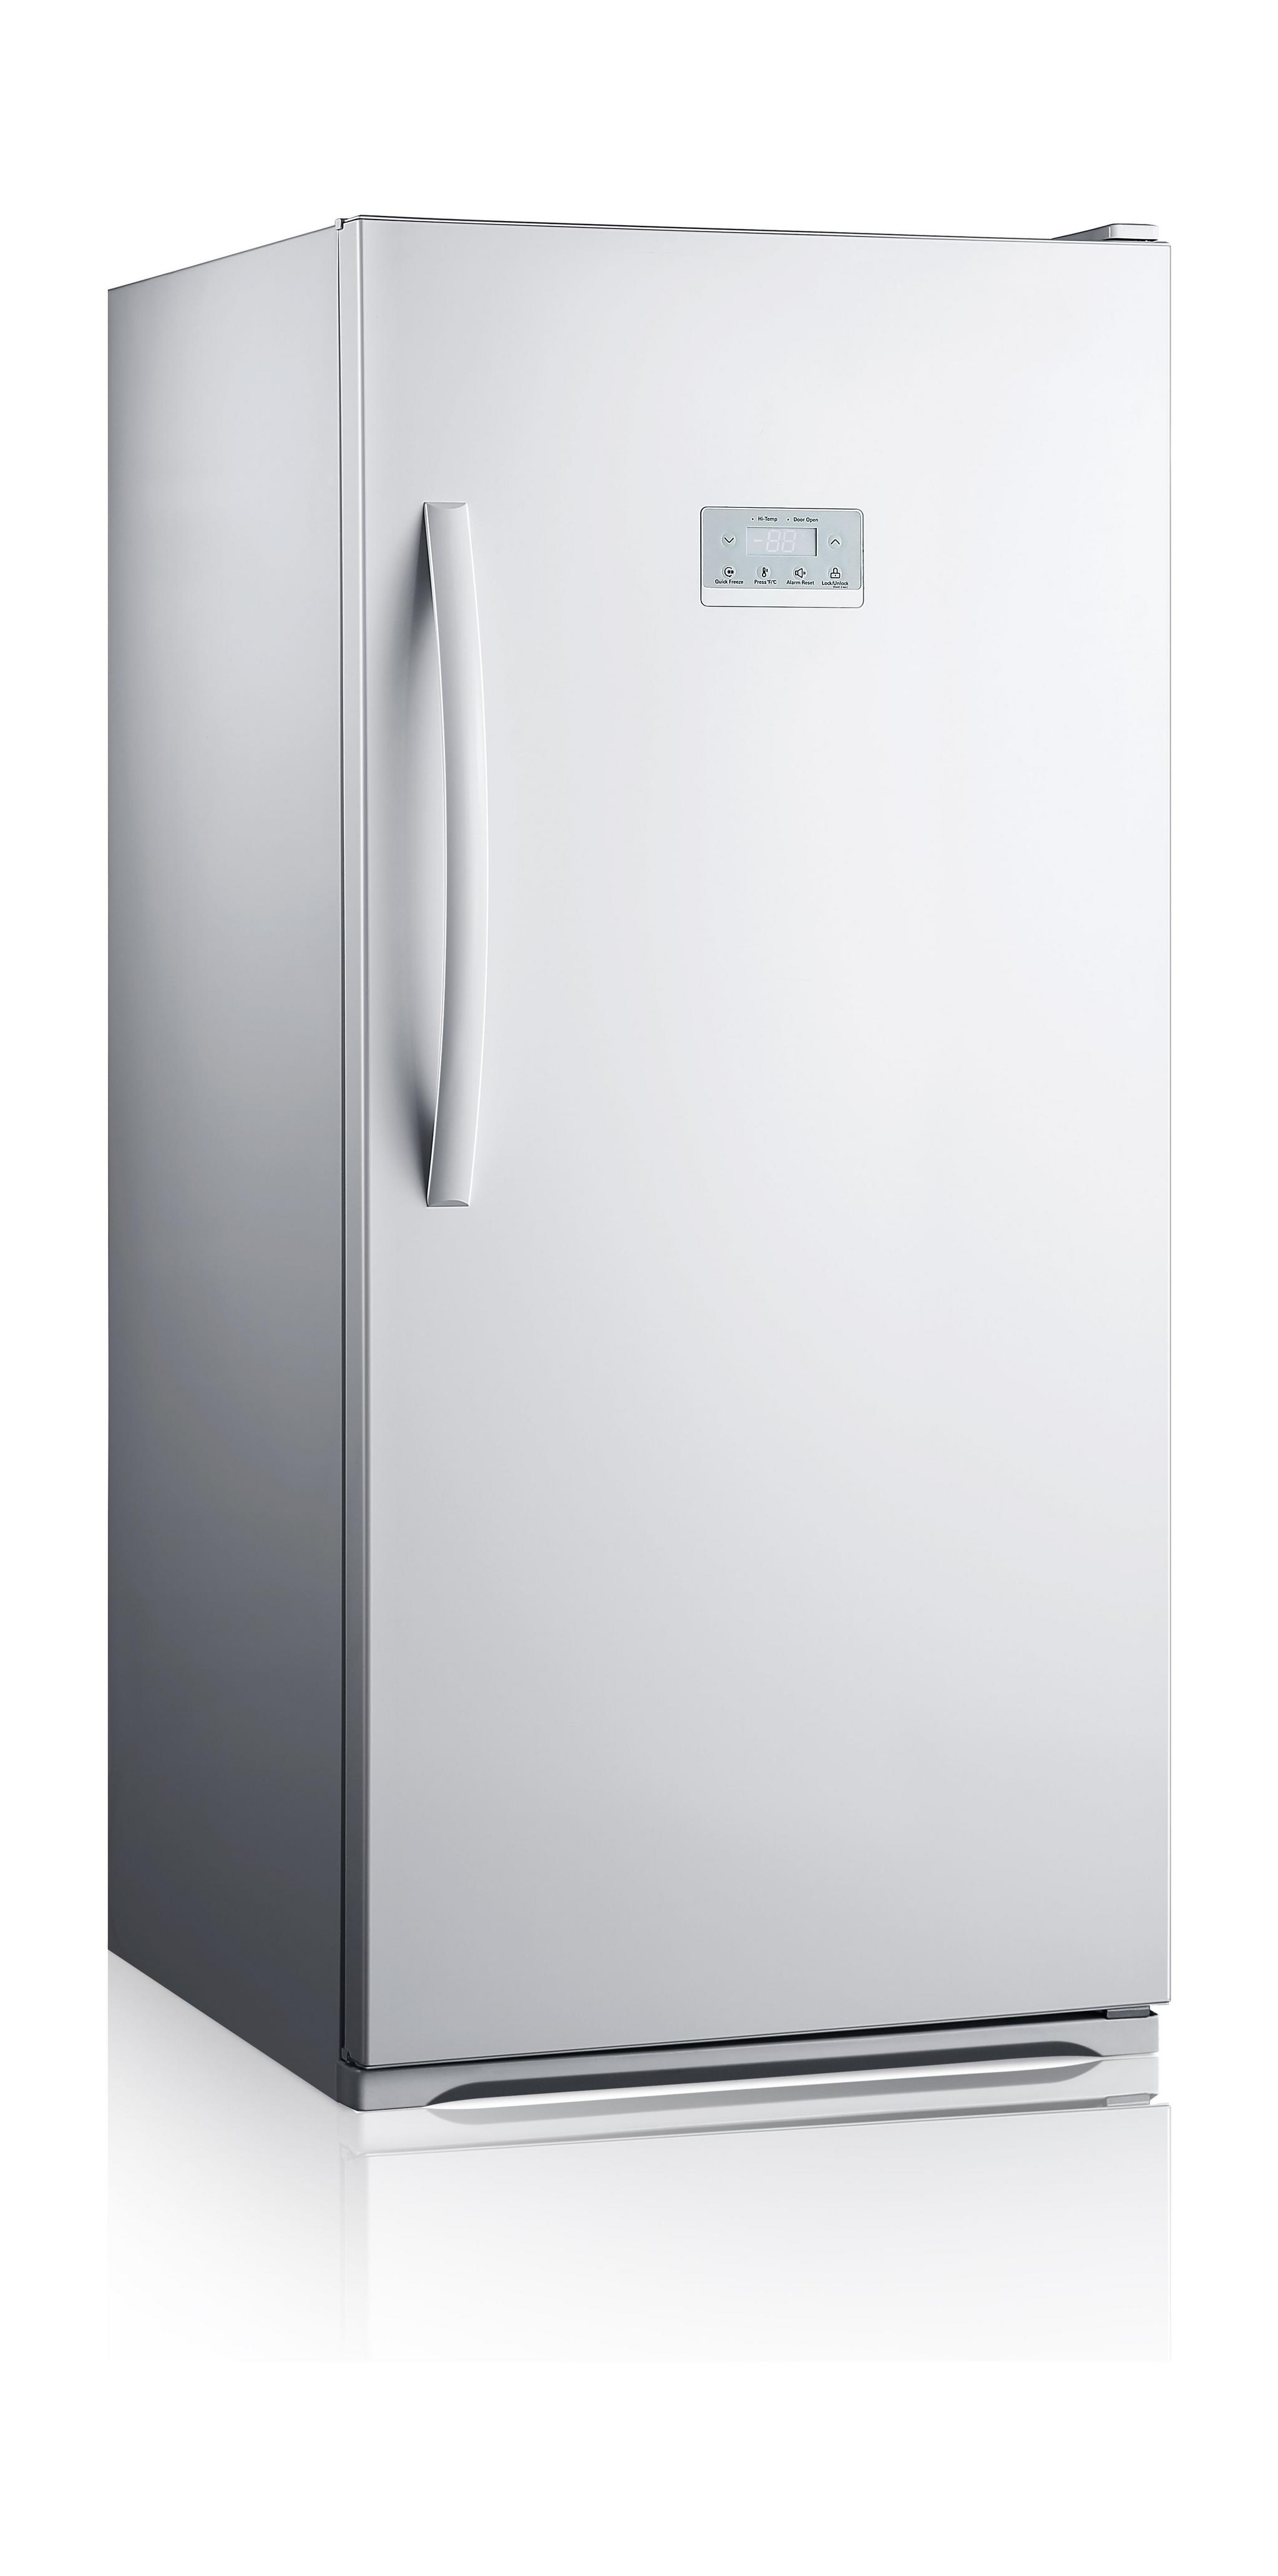 Wansa 13.7Cft 387L Upright Freezer (WUOW388NFWTC62) - White